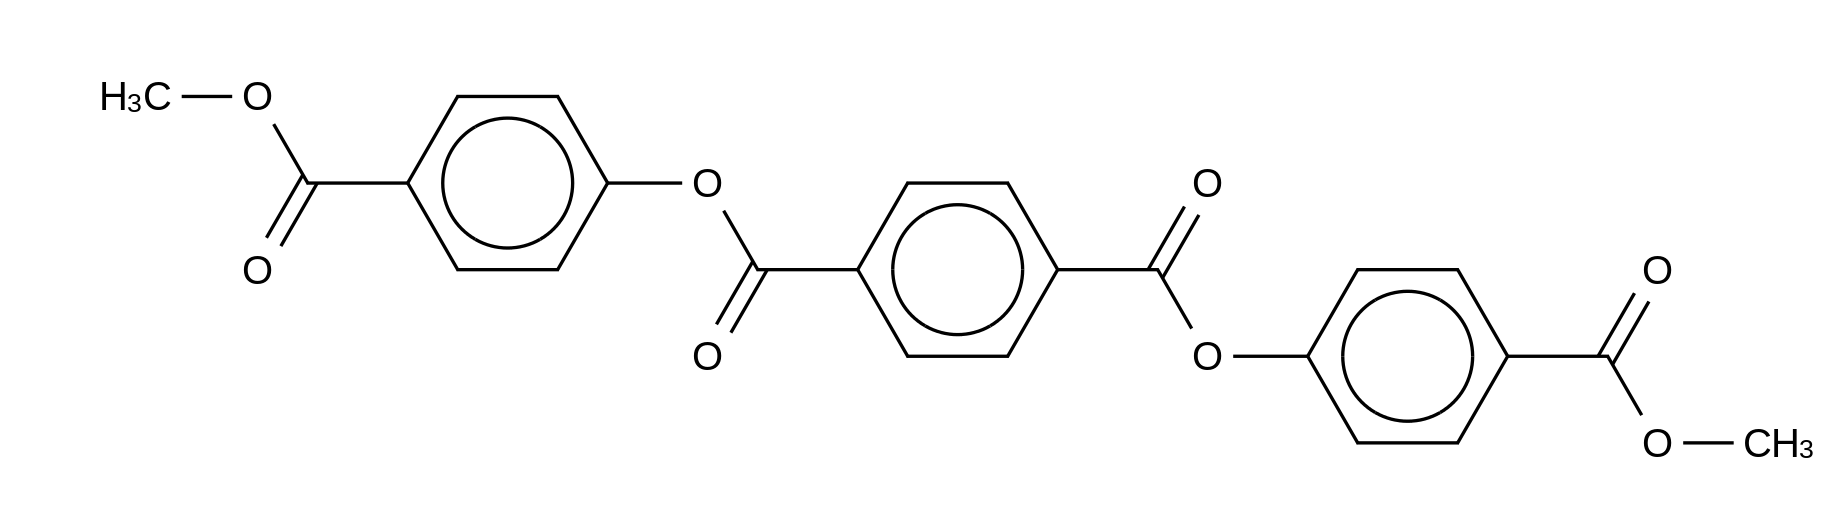 Bis(4-methoxycarbonylphenyl) Terephthalate